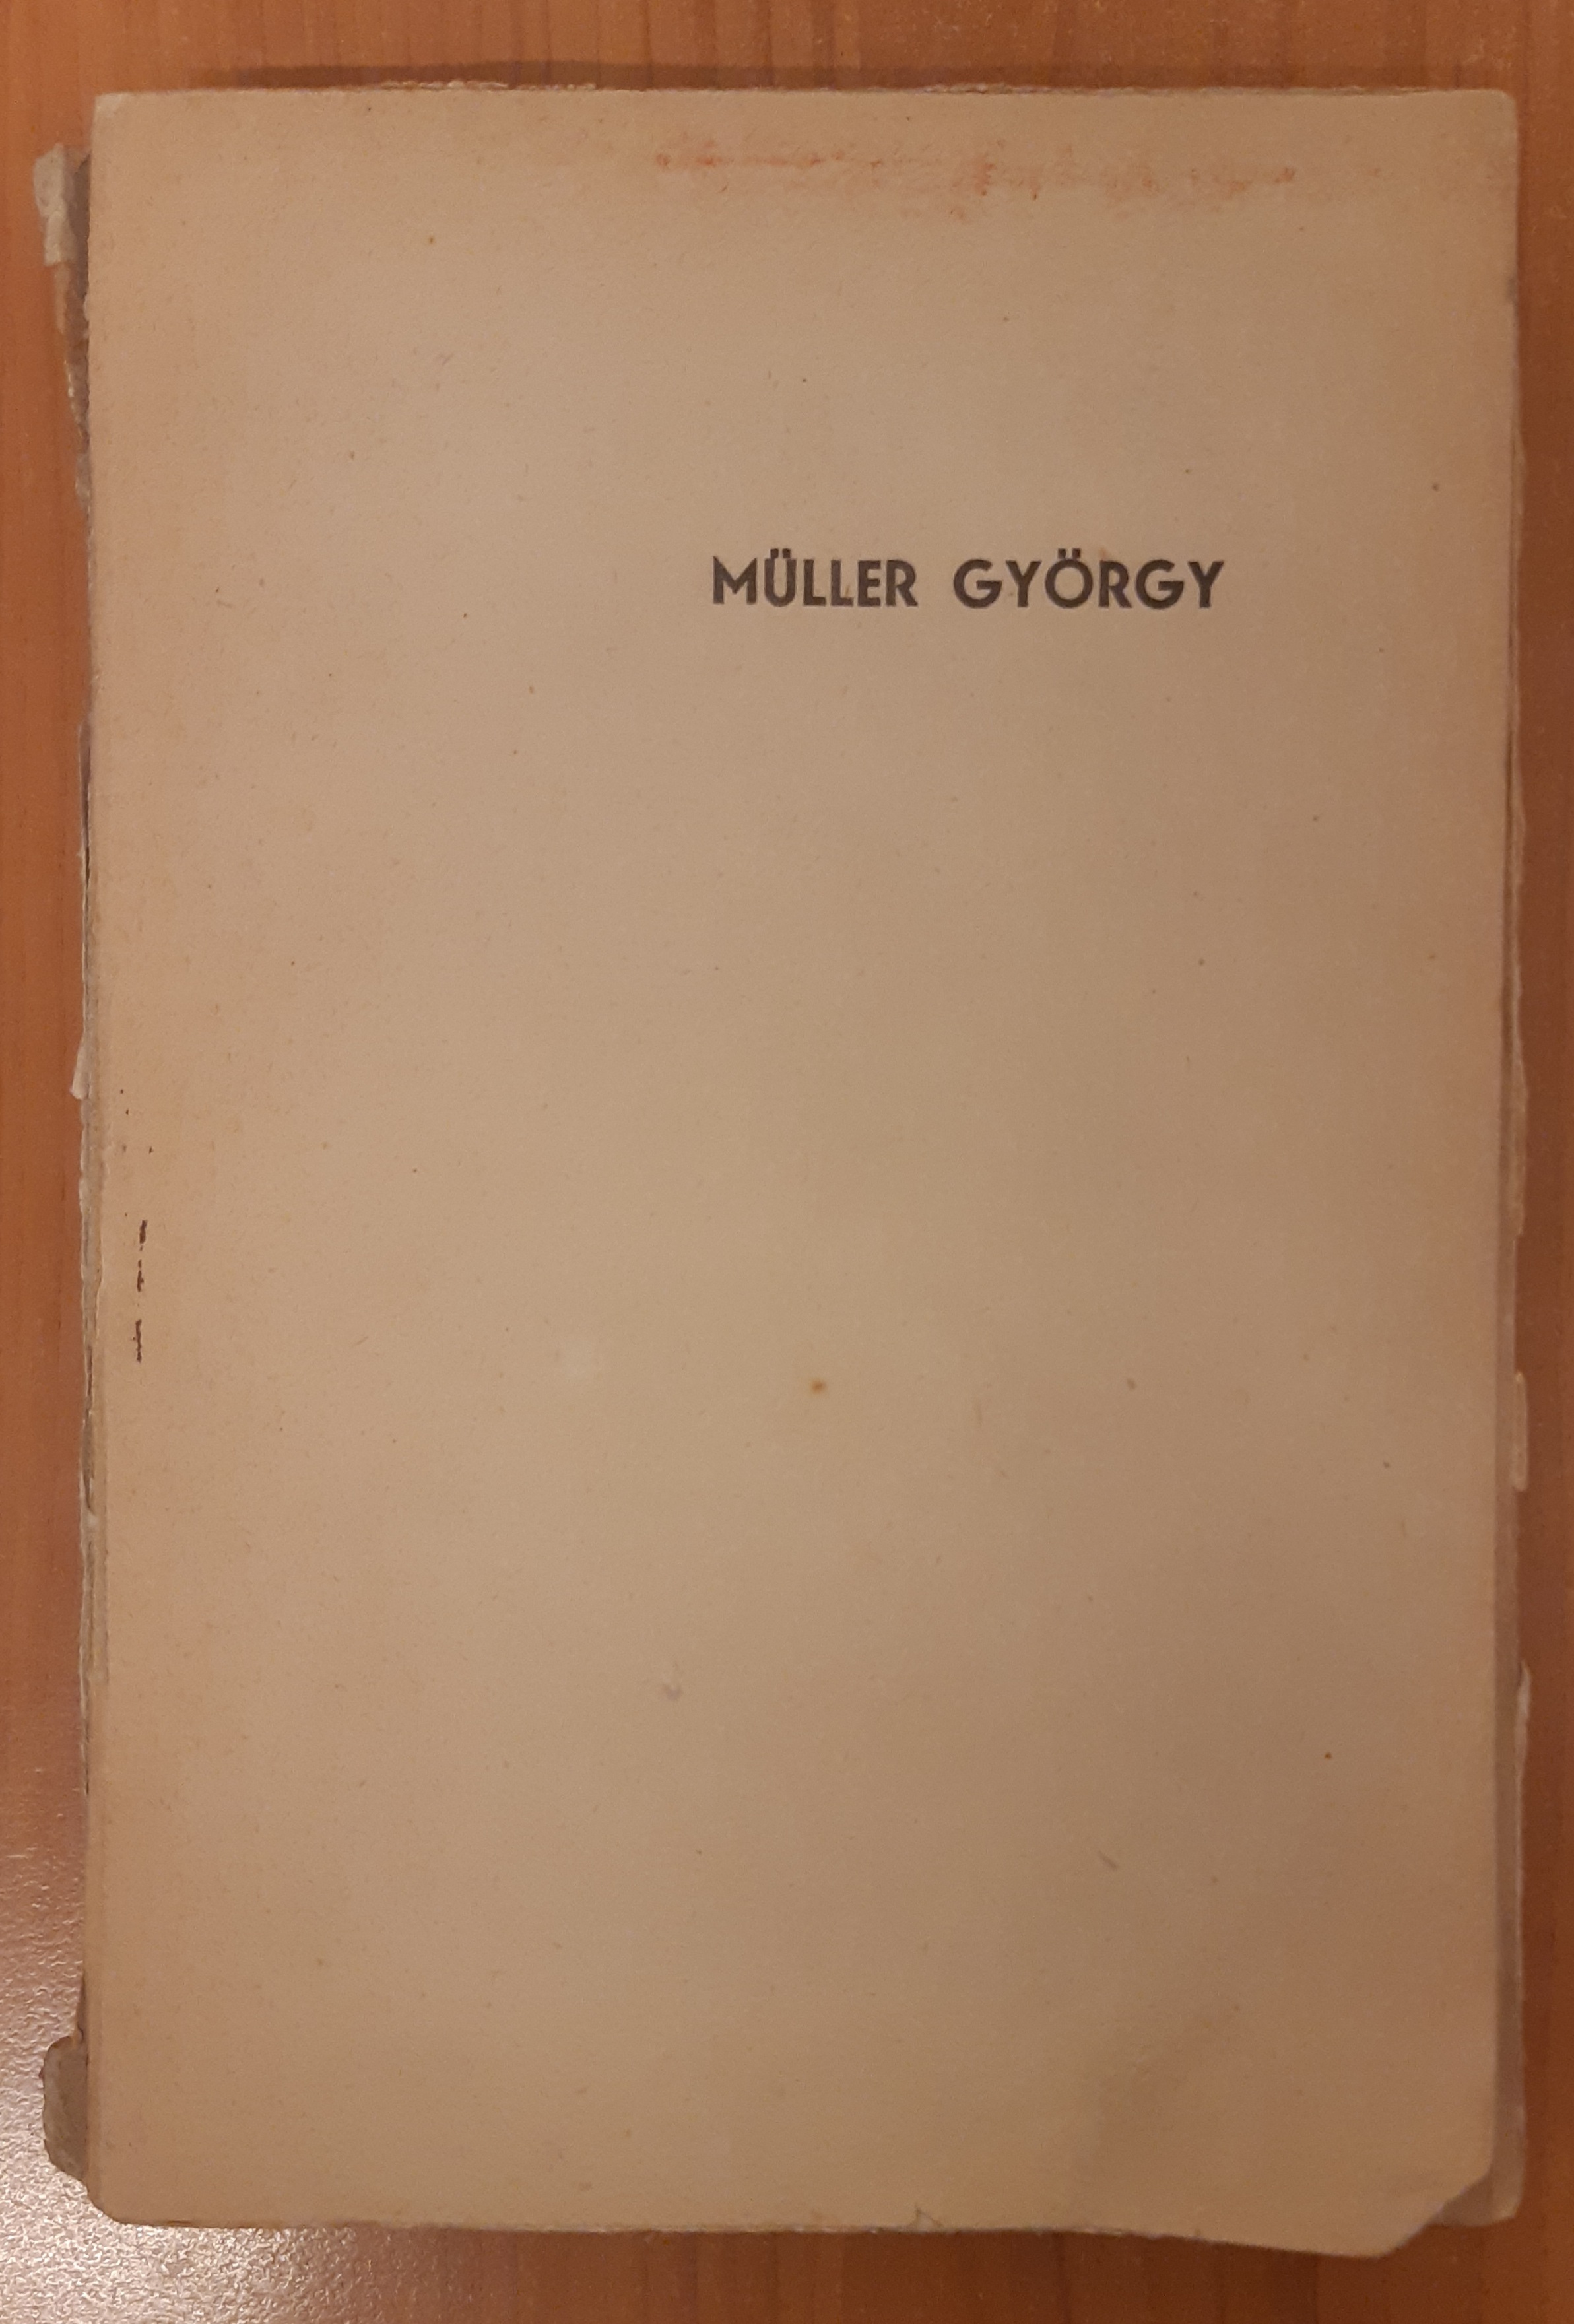 Müller György élete